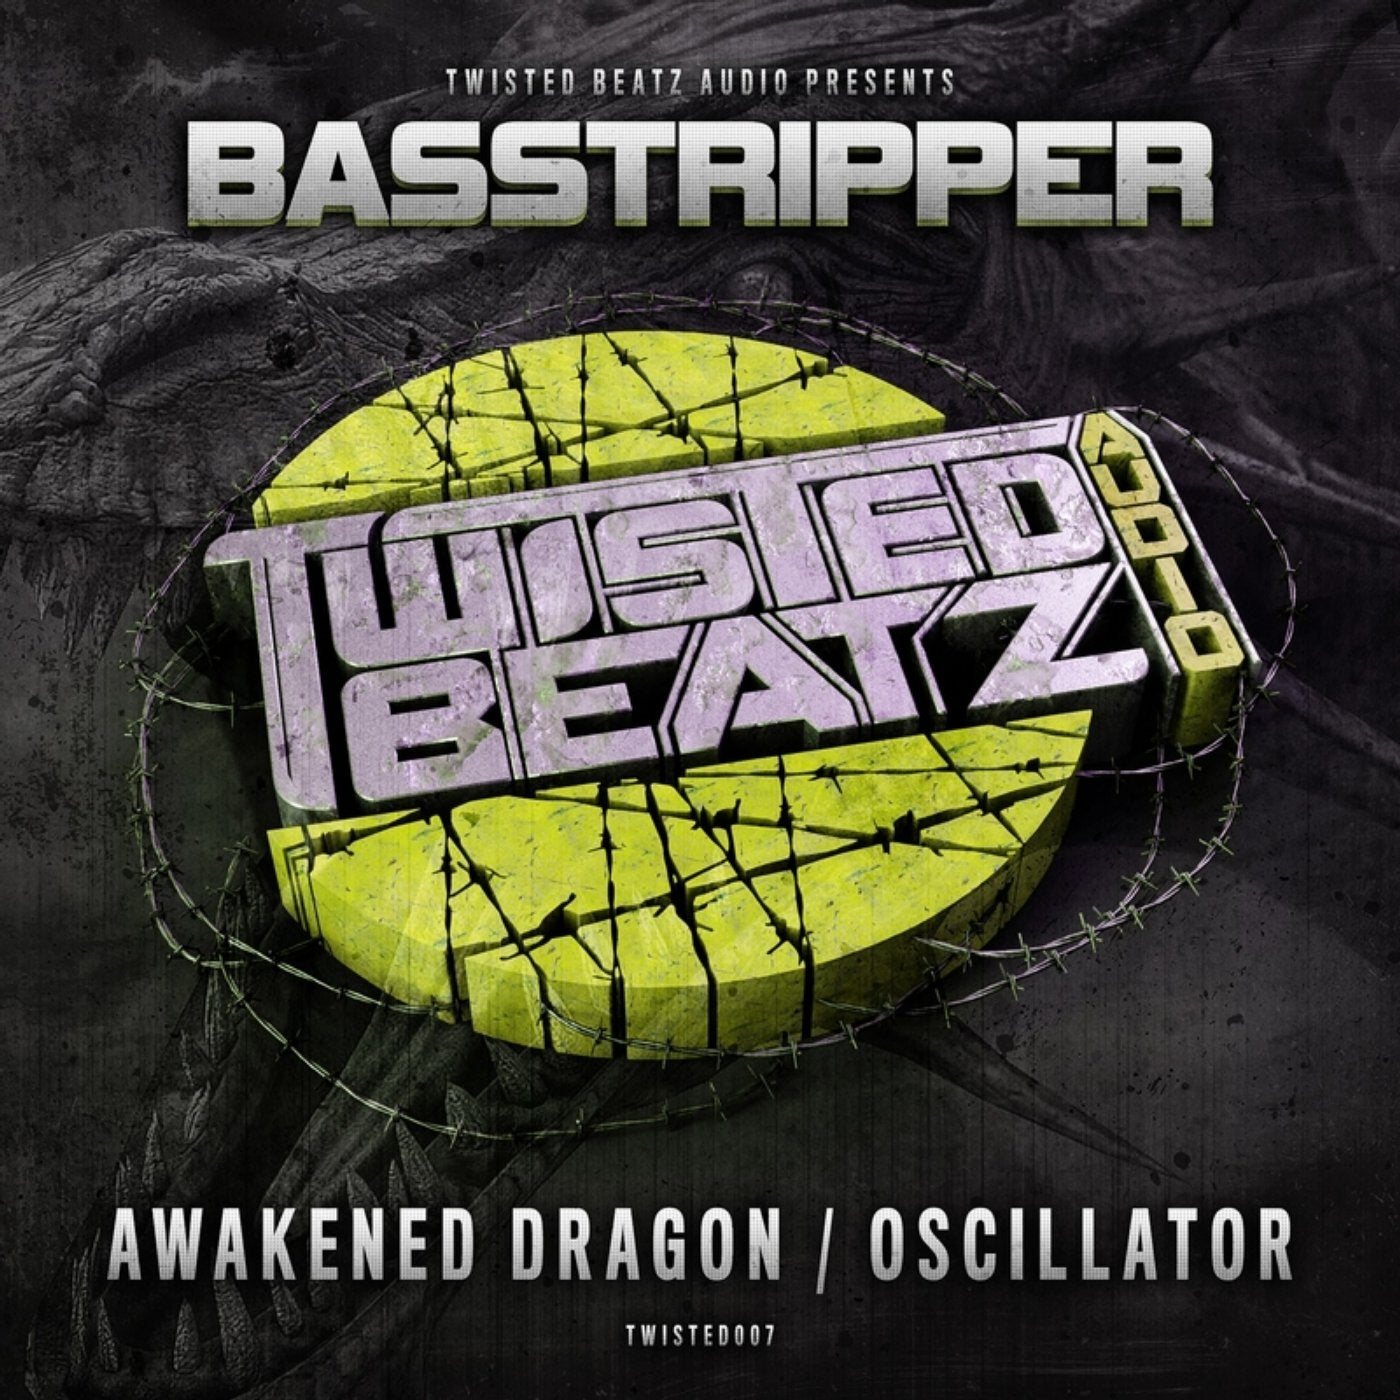 Awakened Dragon / Oscillator